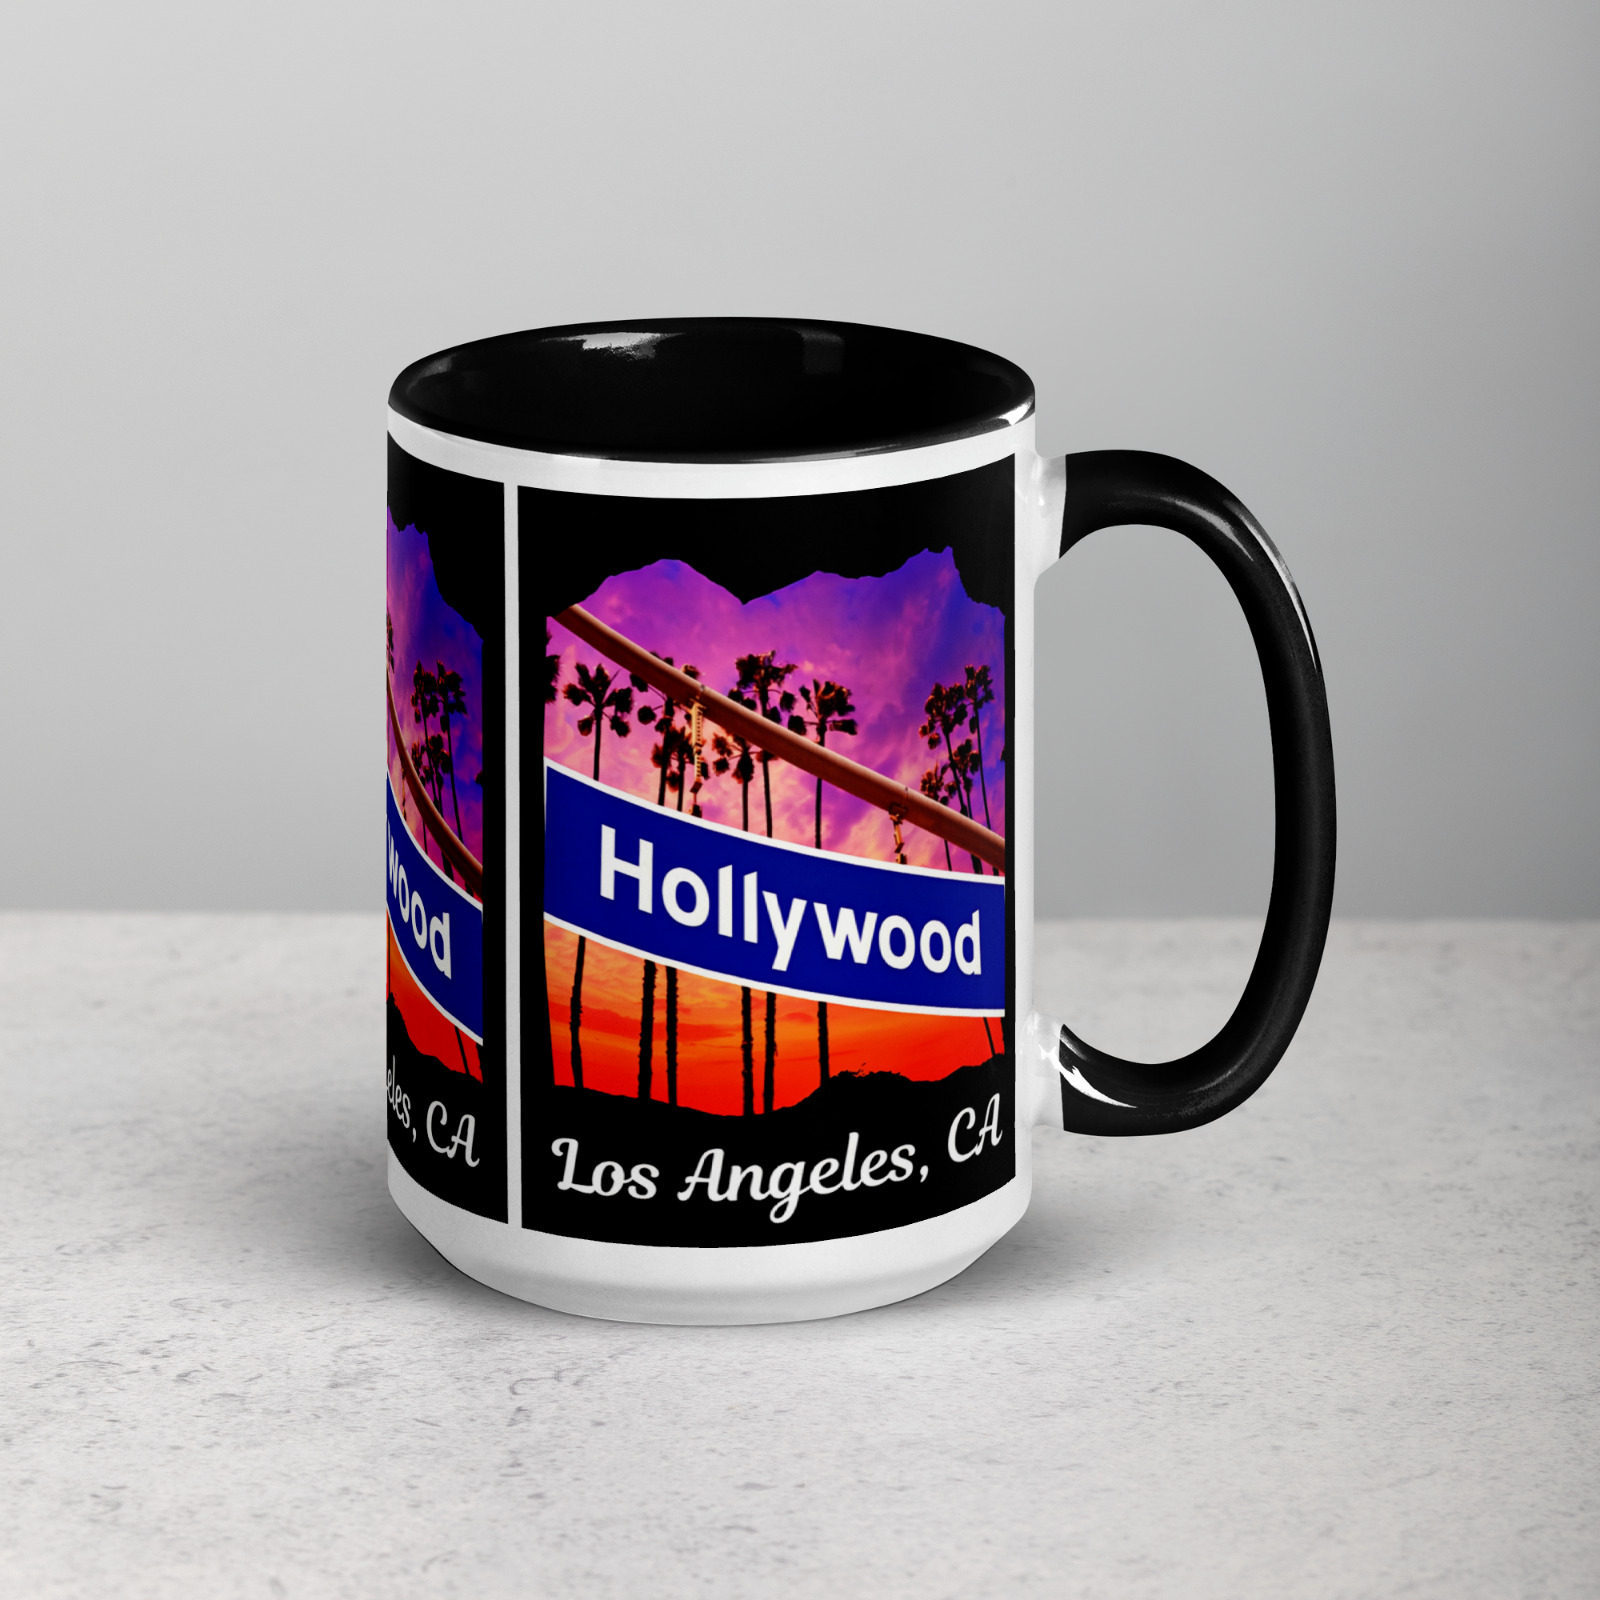 Hollywood Los Angeles, CA Premium Coffee Mug 15oz (443.60ml) Souvenir FAN ART